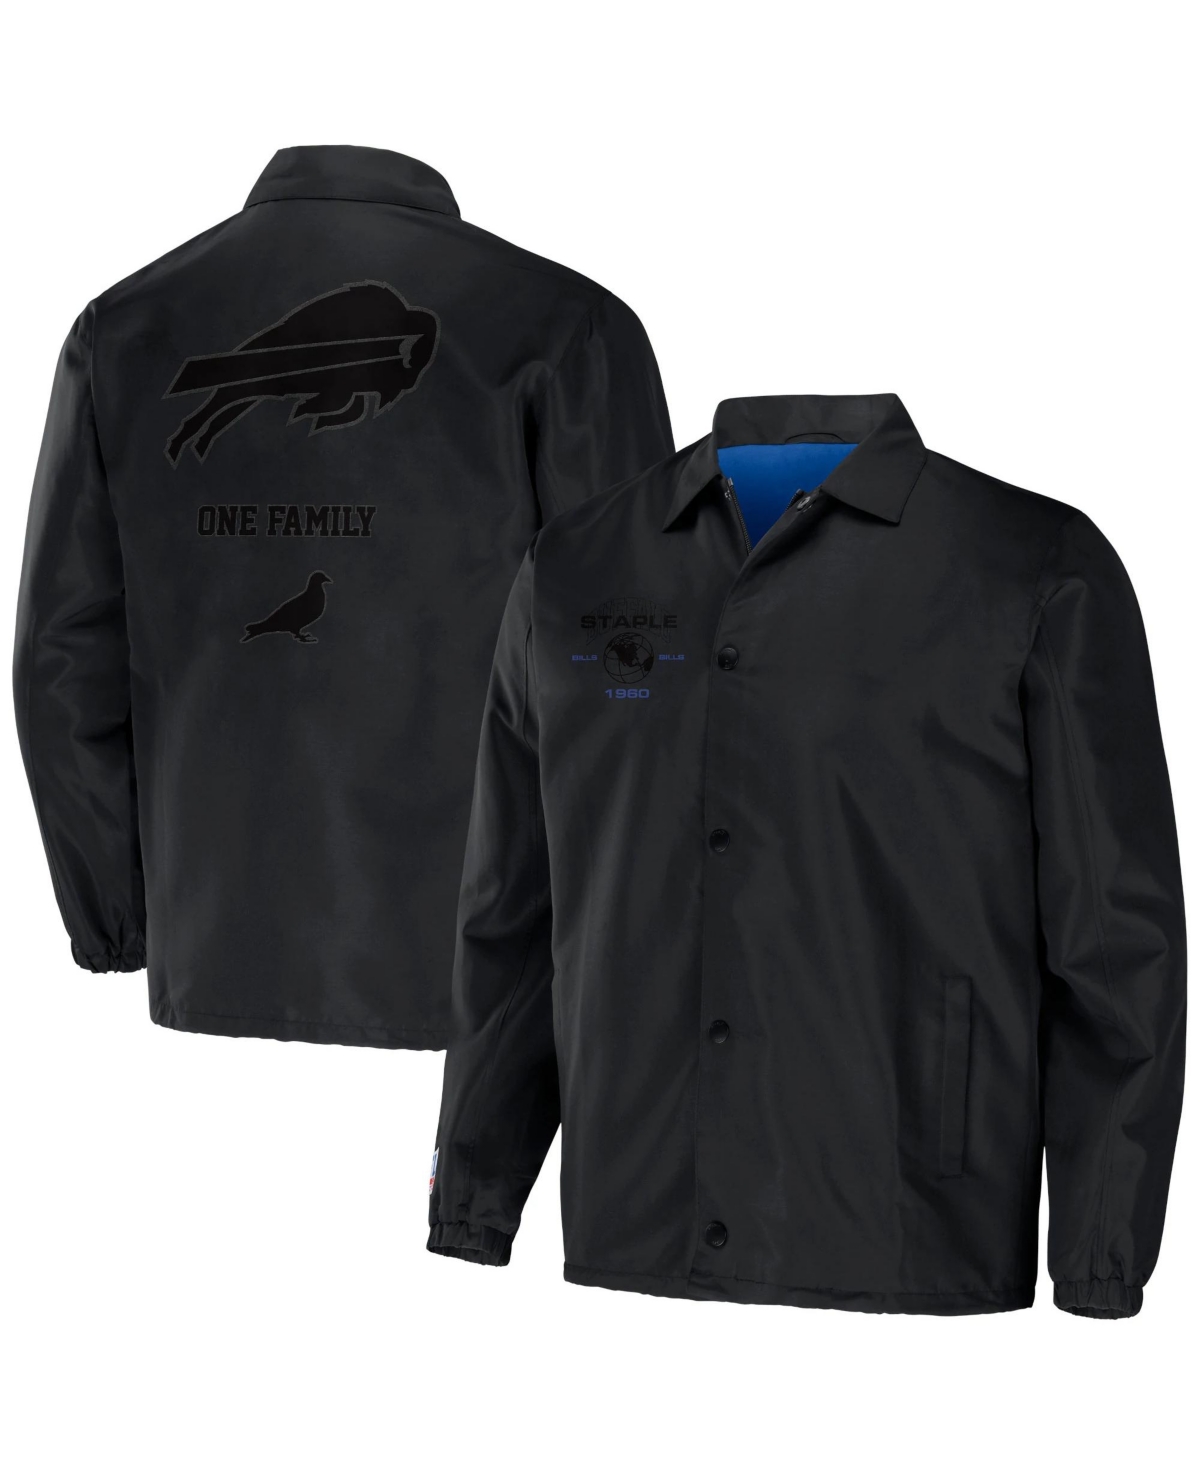 Nfl Properties Men's Nfl X Staple Black Carolina Panthers Embroidered Nylon Jacket